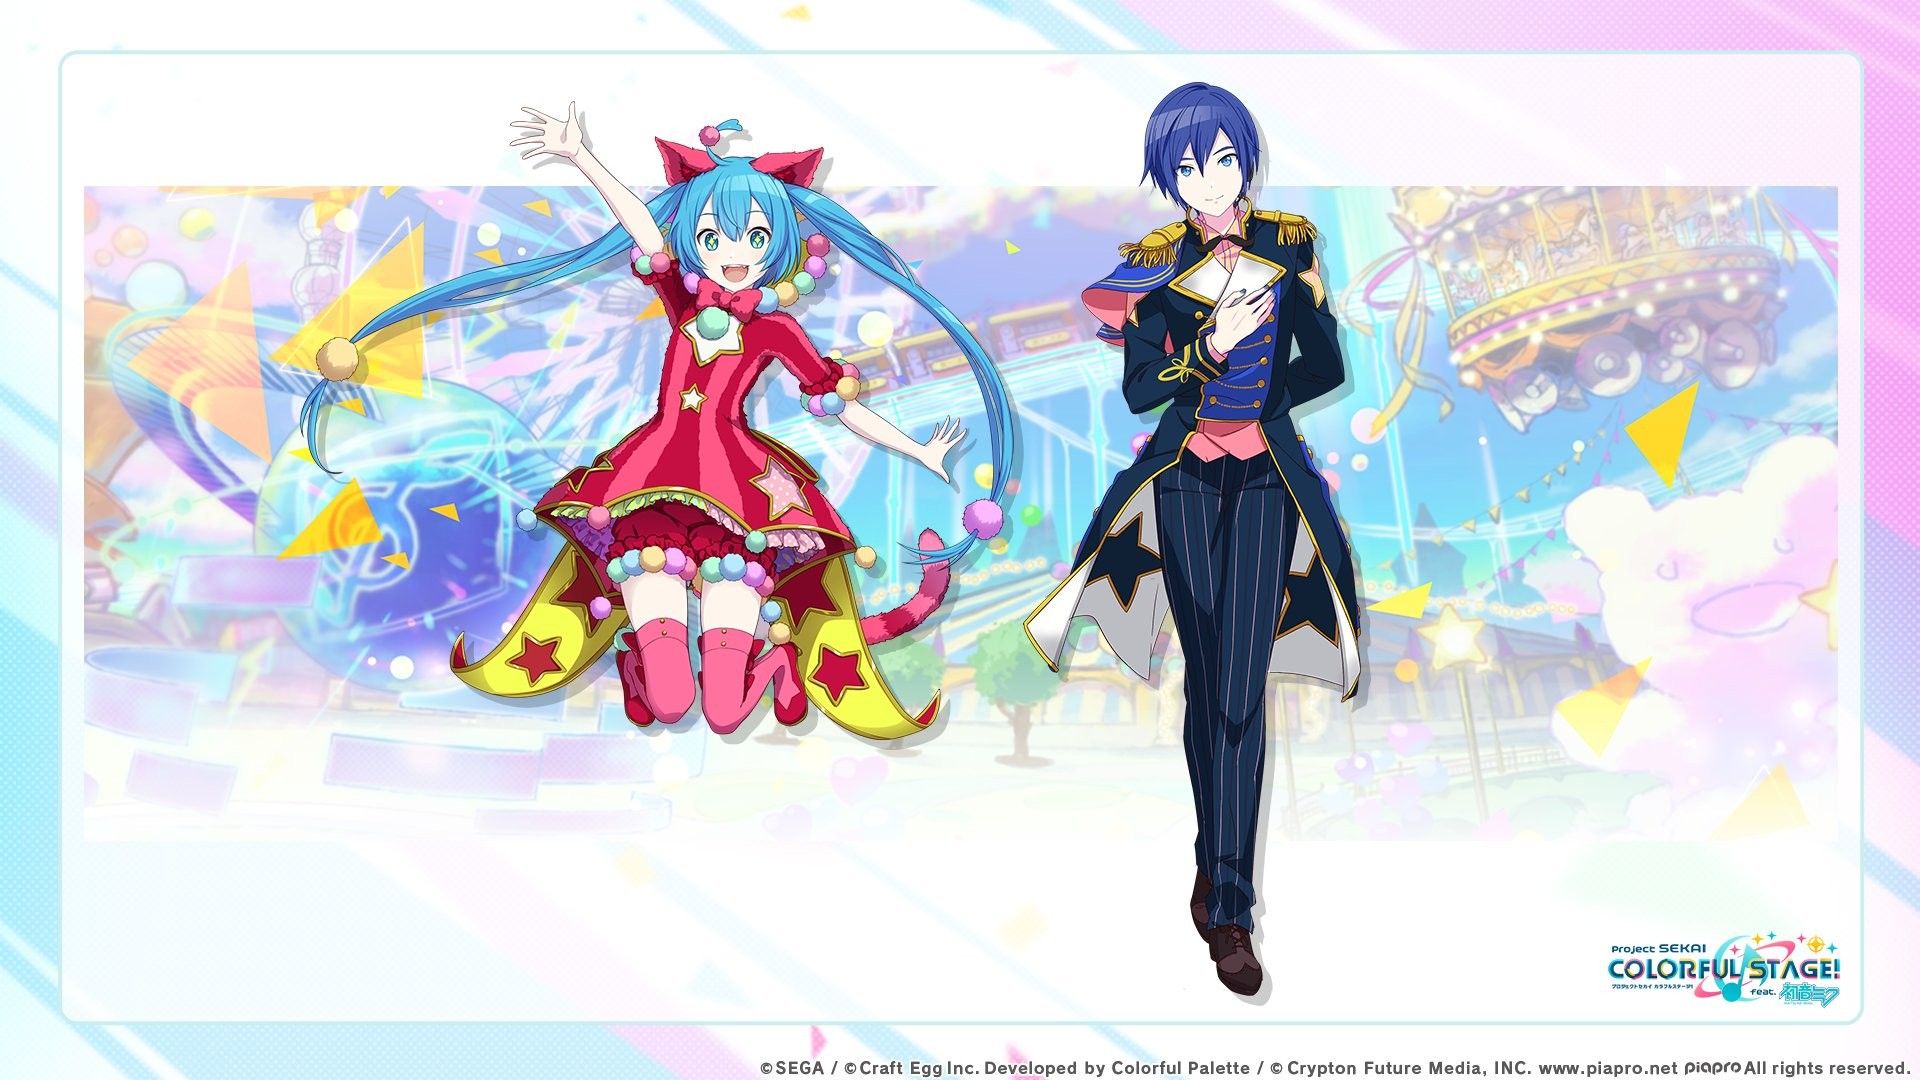 Sekai Colorful Stage Miku. Anime image, Hatsune miku, Vocaloid